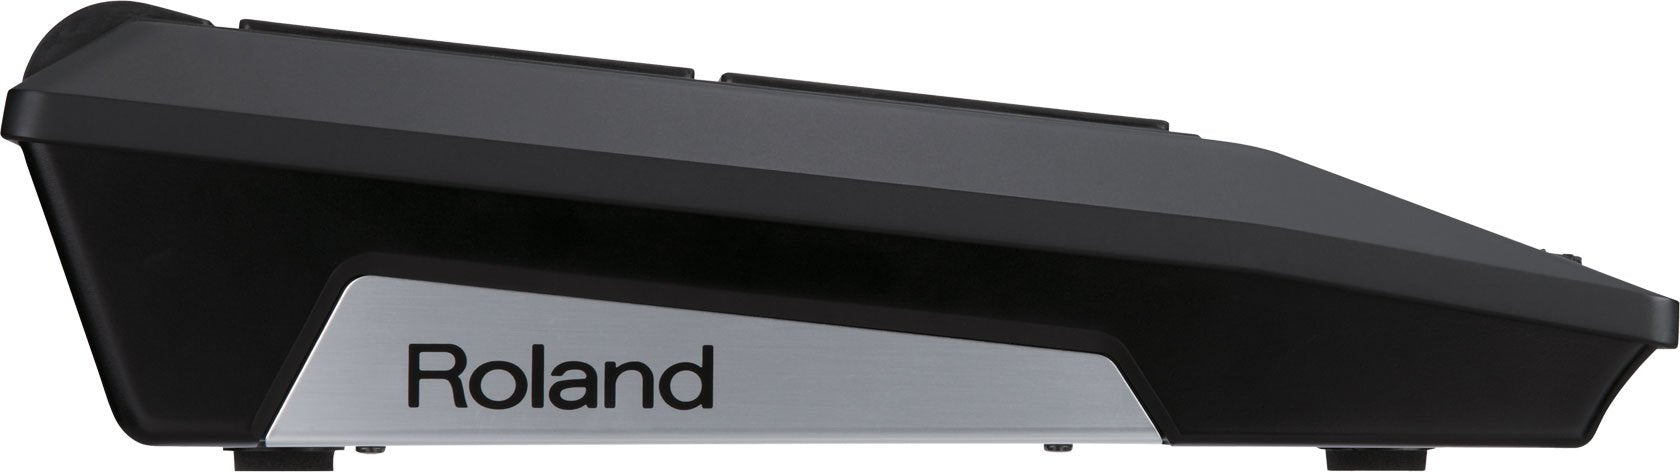 Roland sampling pad SPD-SX Multicolor Black MIDI Controller USB LED Indicator_4